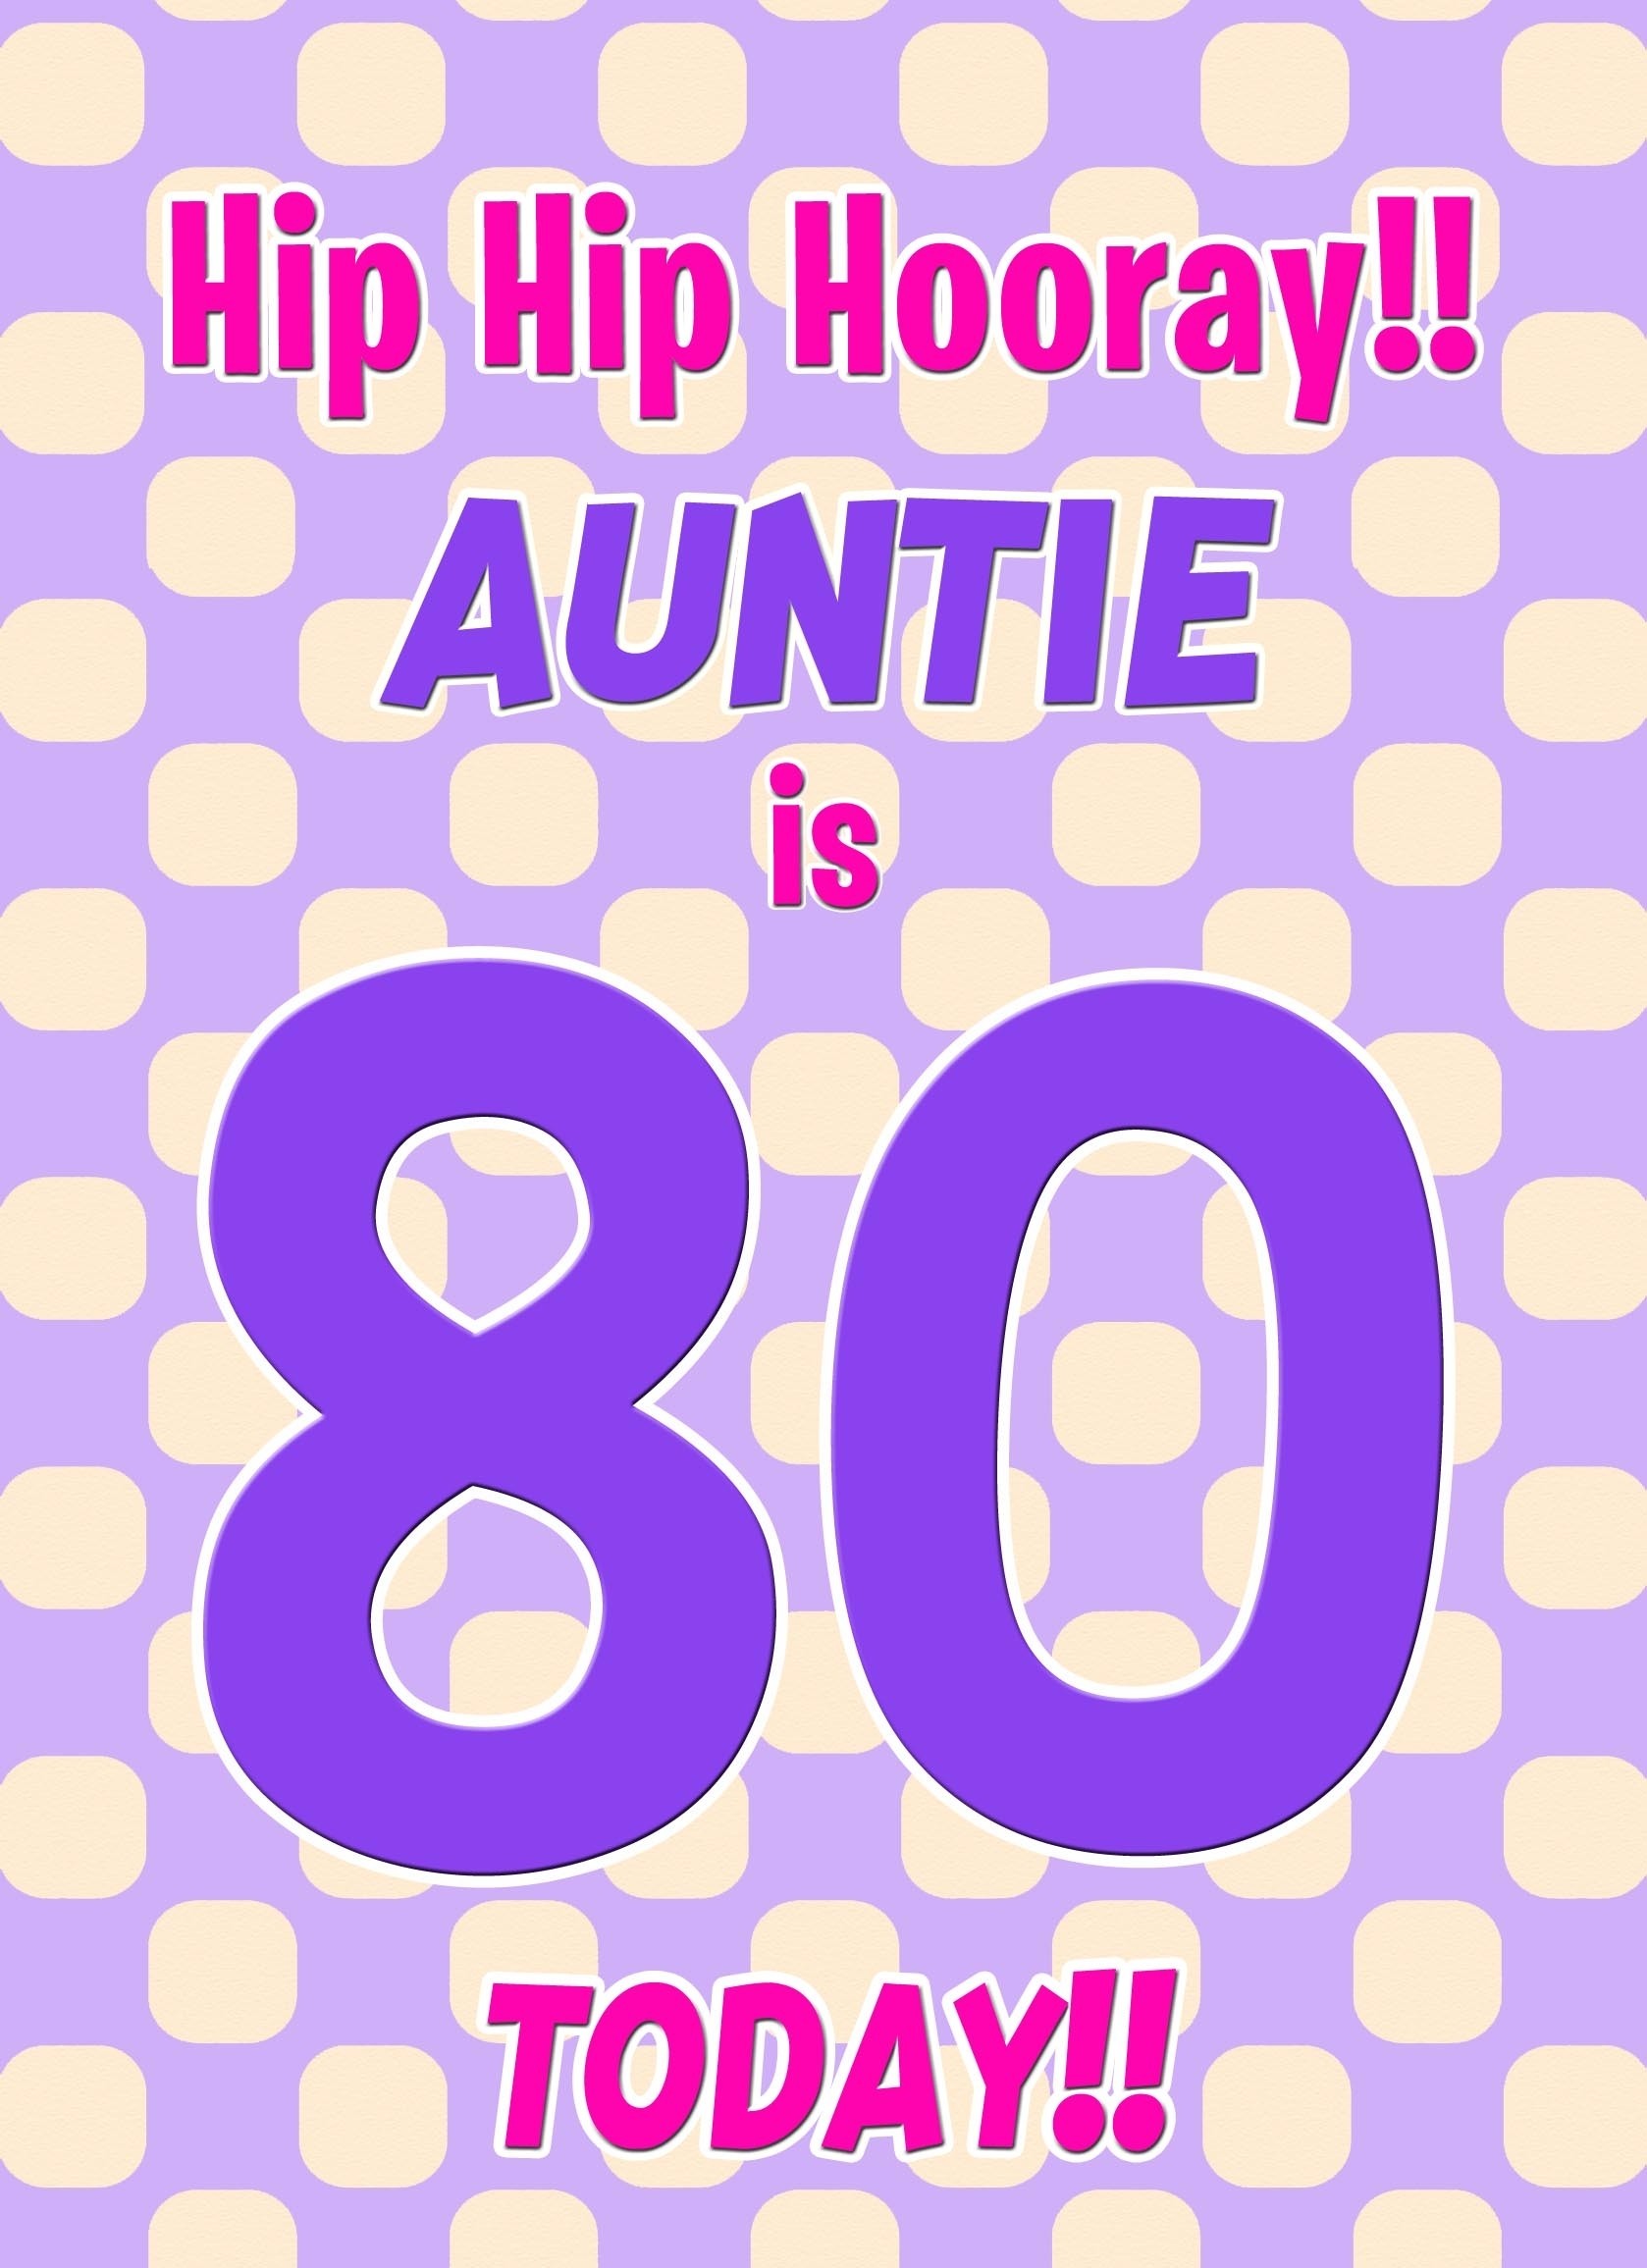 Auntie 80th Birthday Card (Purple Spots)